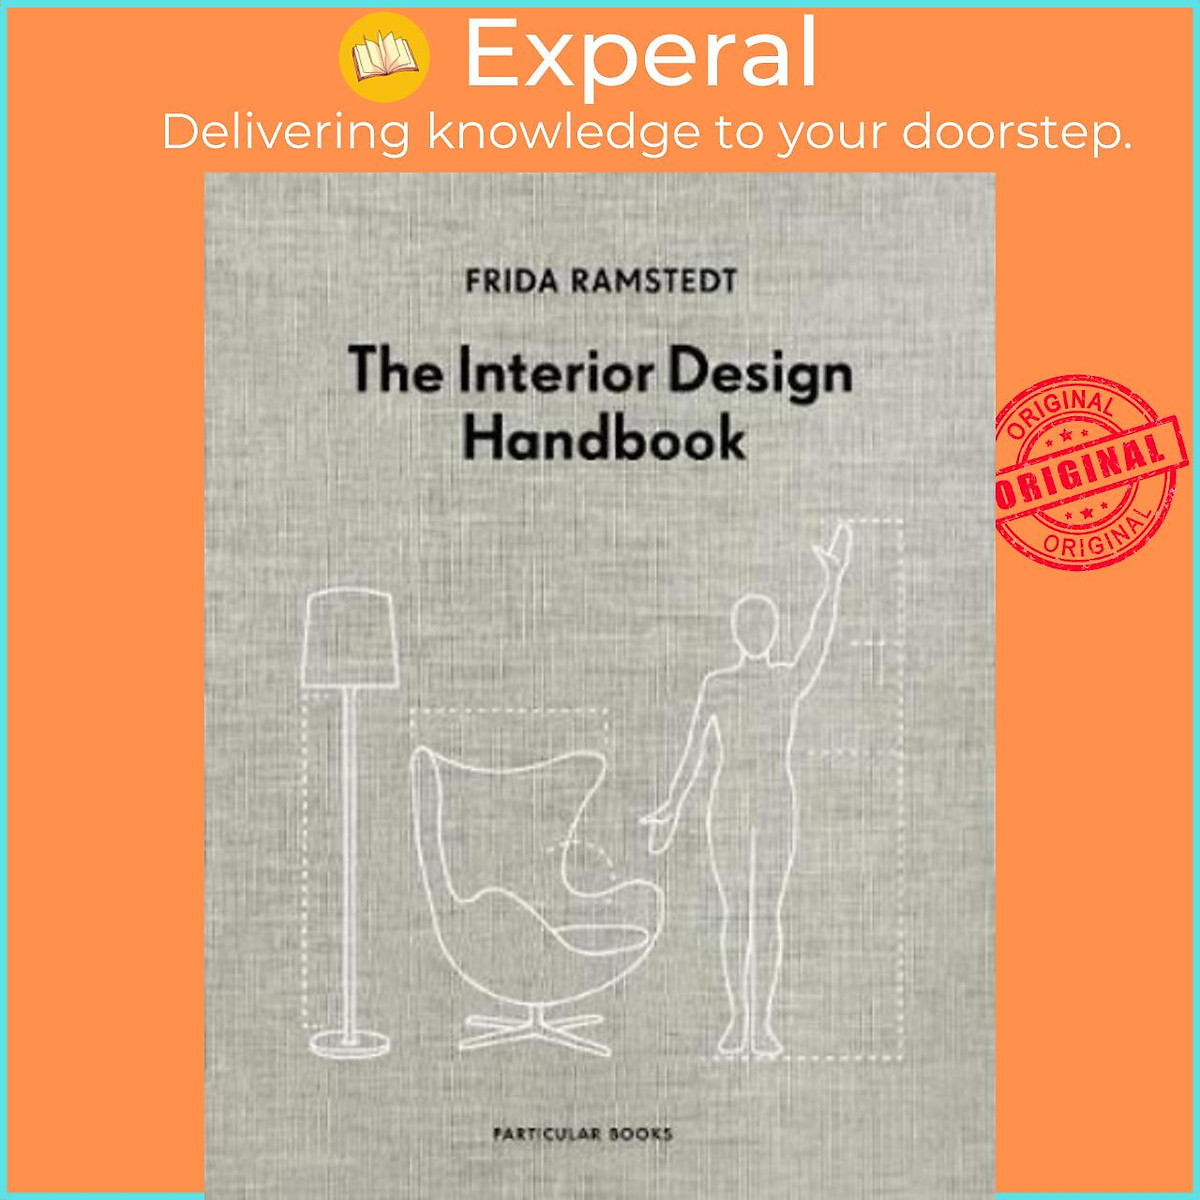 Sách - The Interior Design Handbook by Frida Ramstedt (UK edition, hardcover)